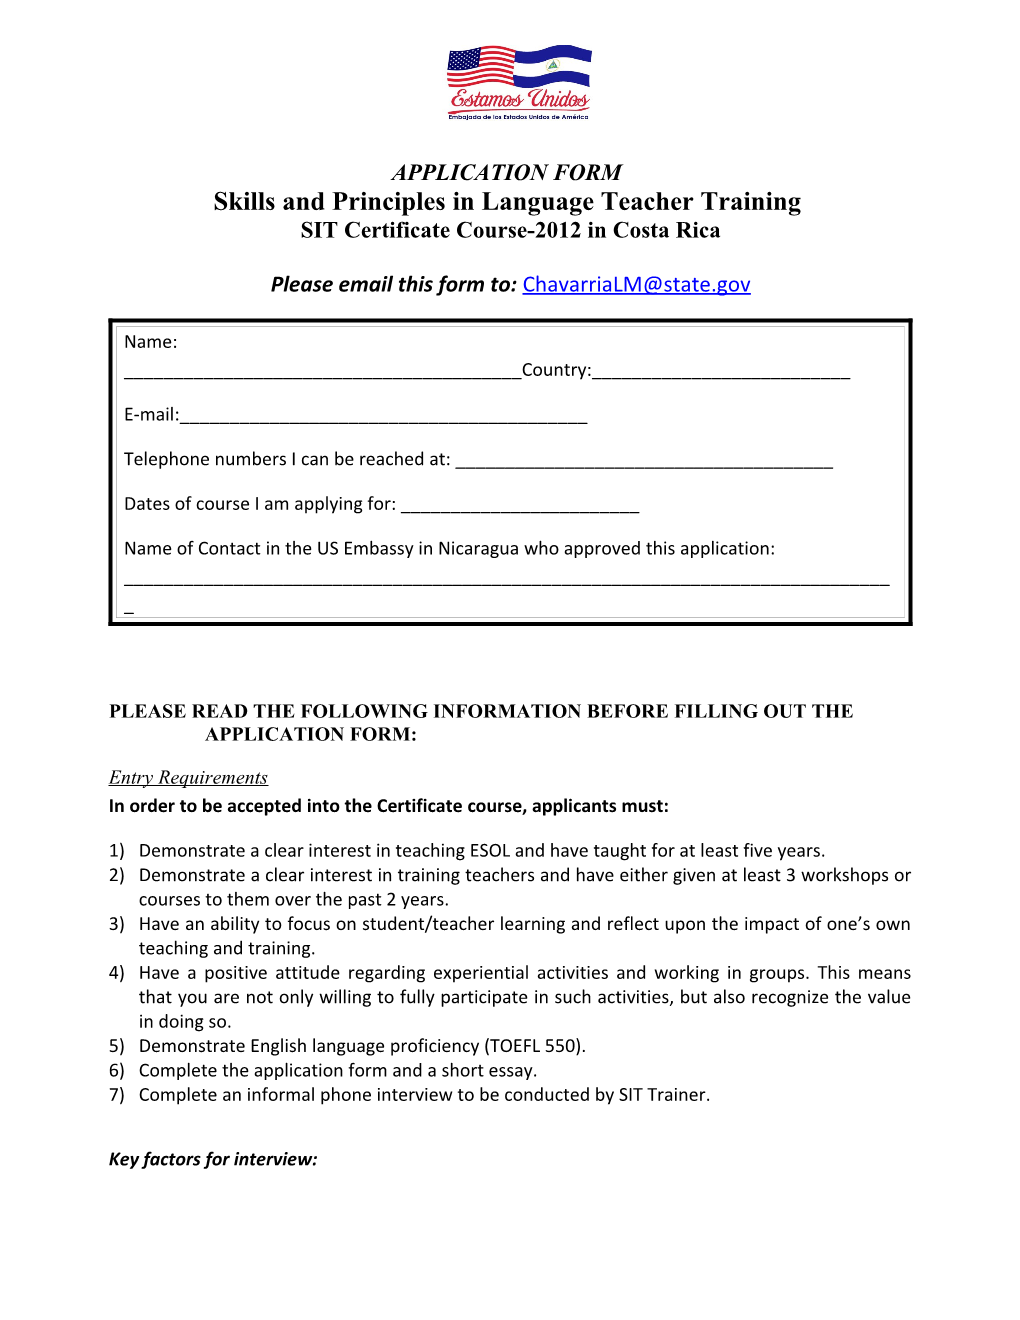 Skills and Principles in Language Teacher Training